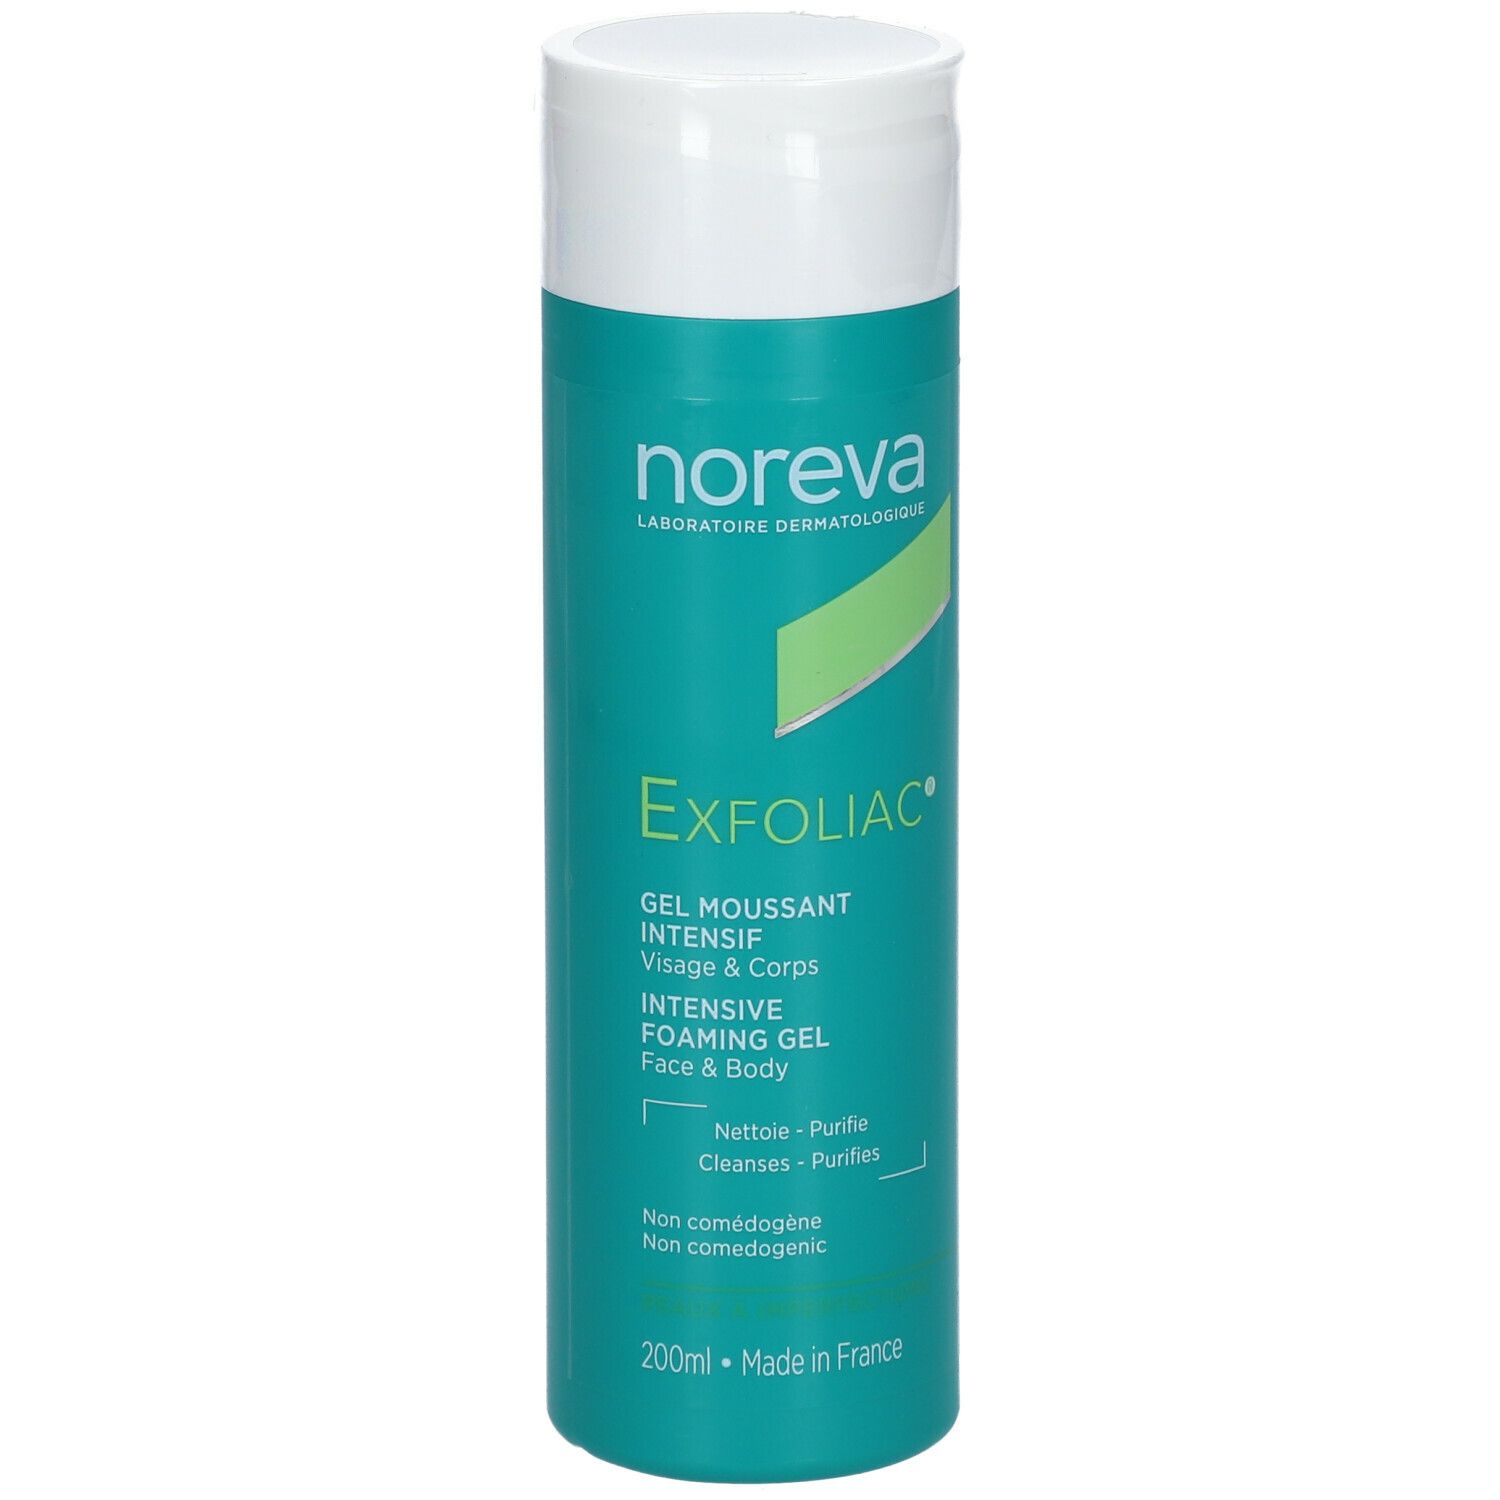 noreva Exfoliac® Reinigungsgel